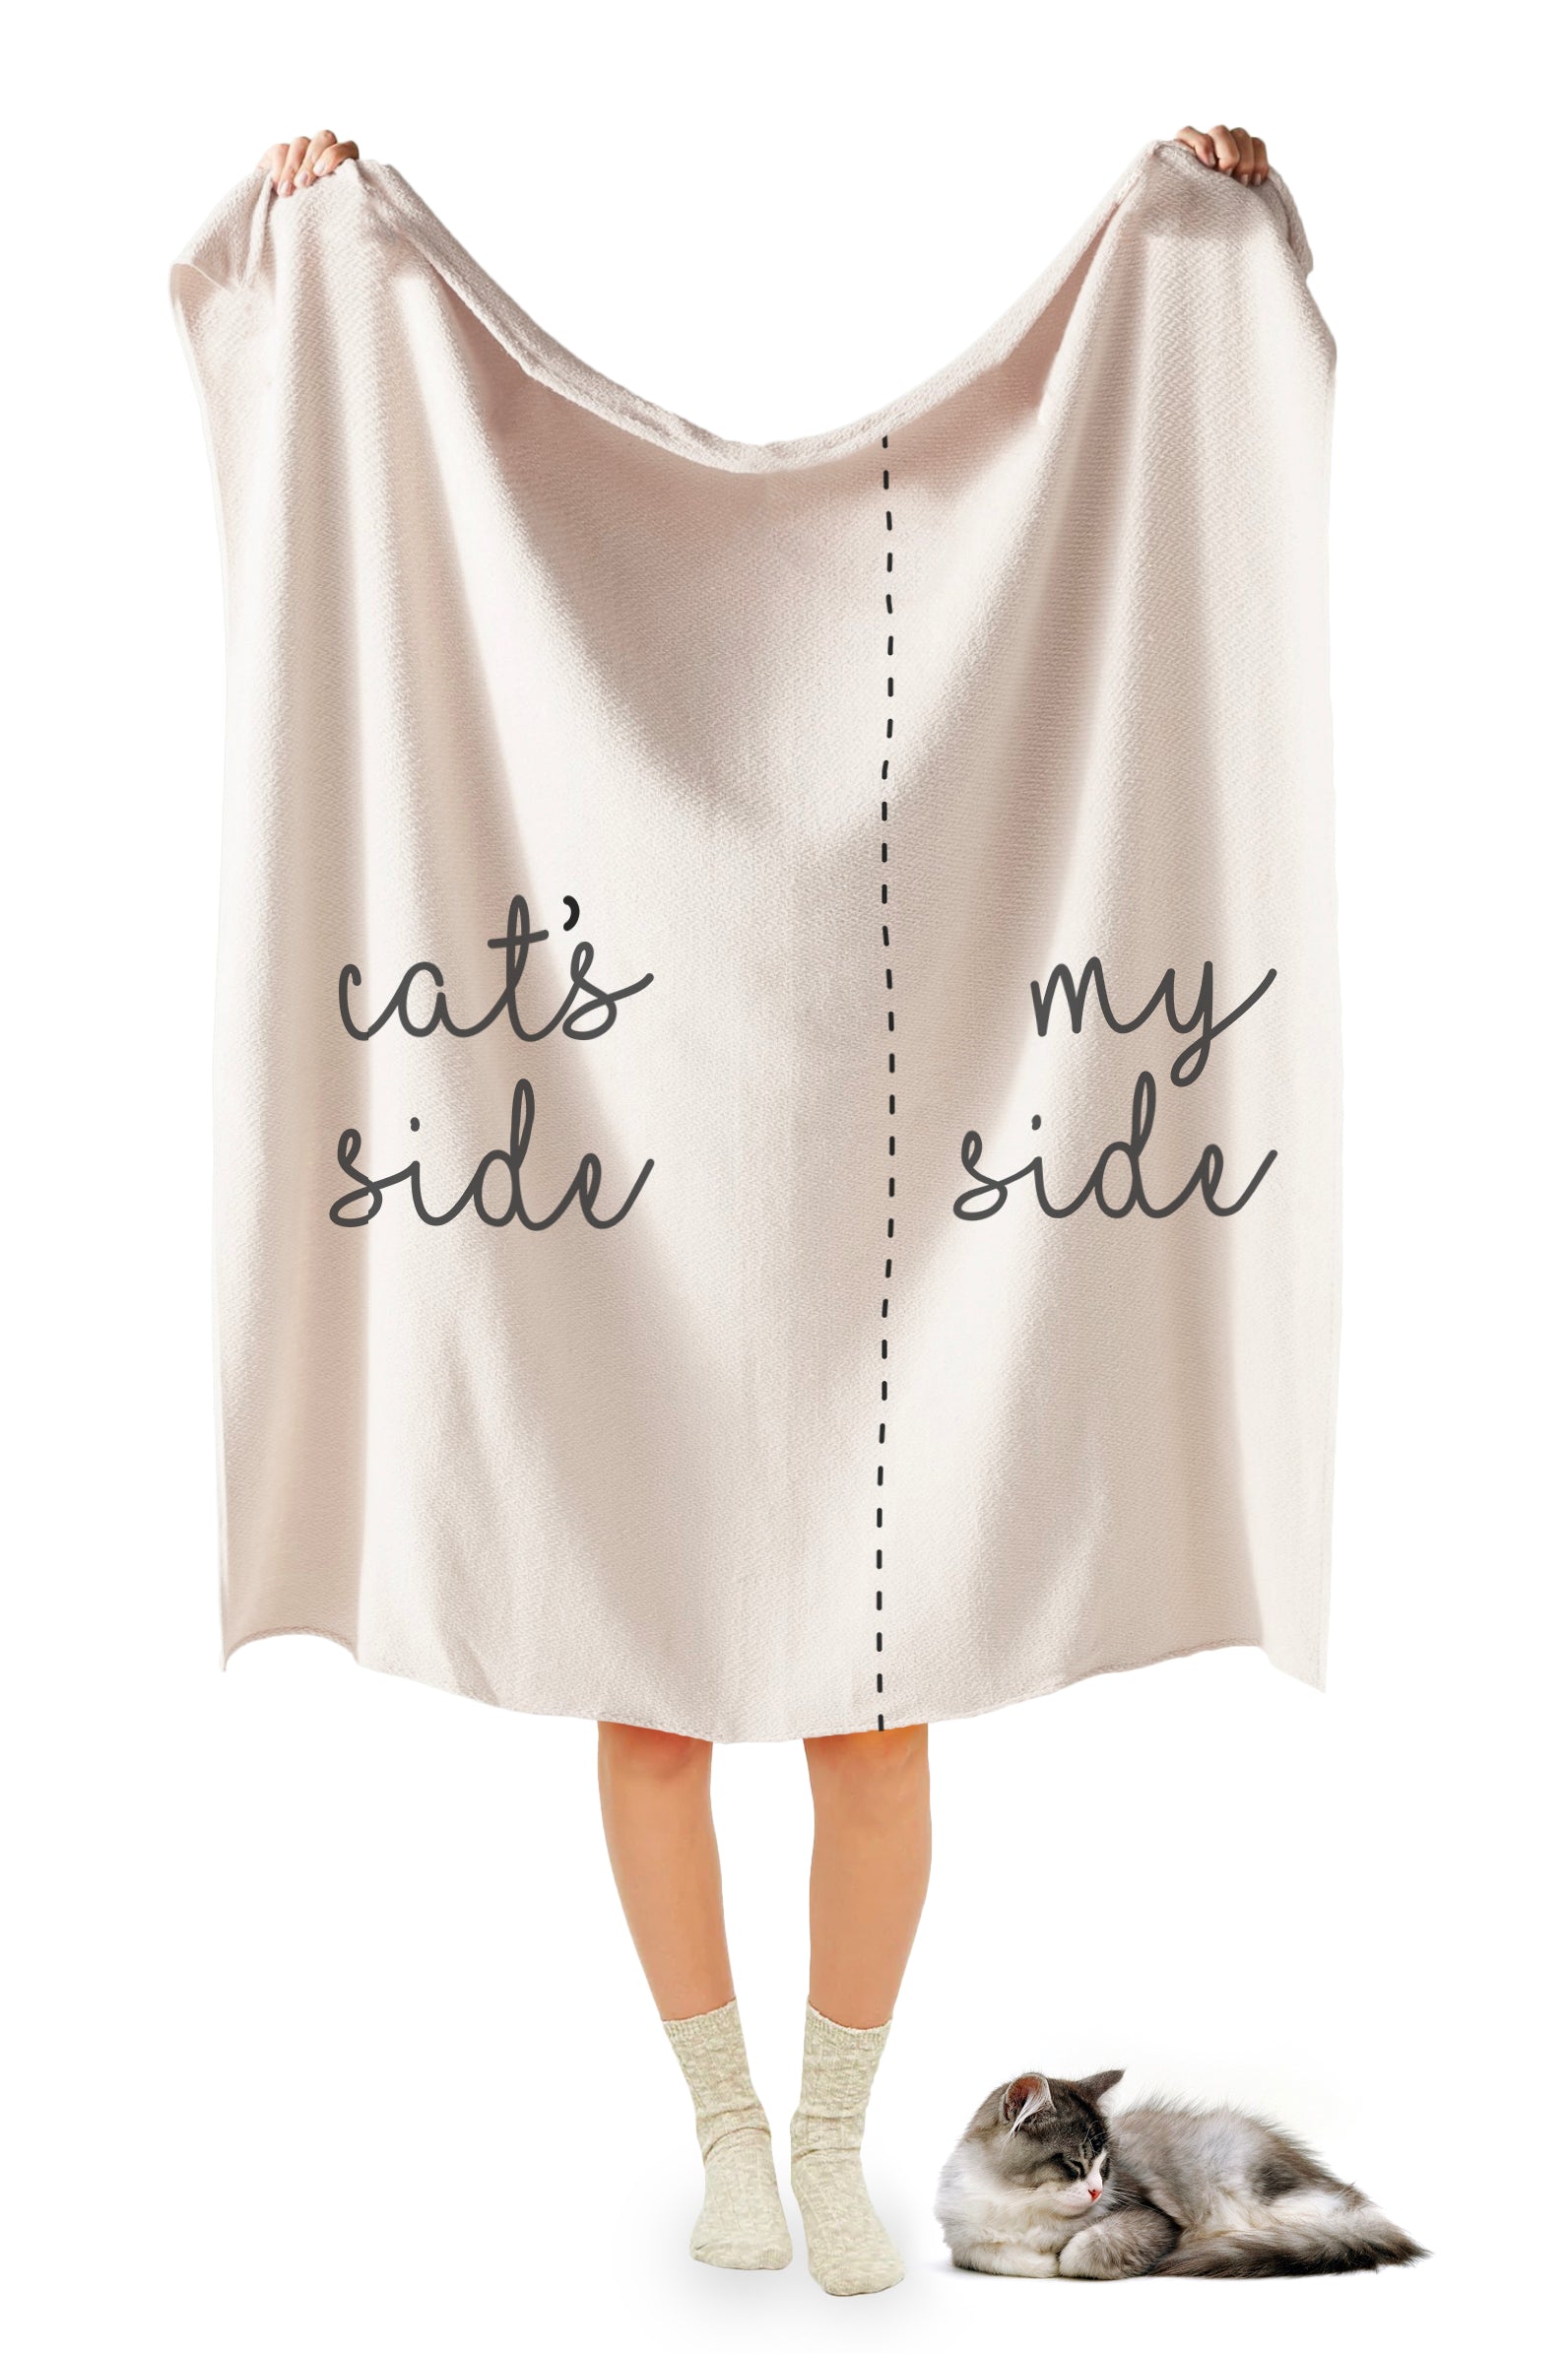 Custom Print Your Cat Blanket – Meowingtons